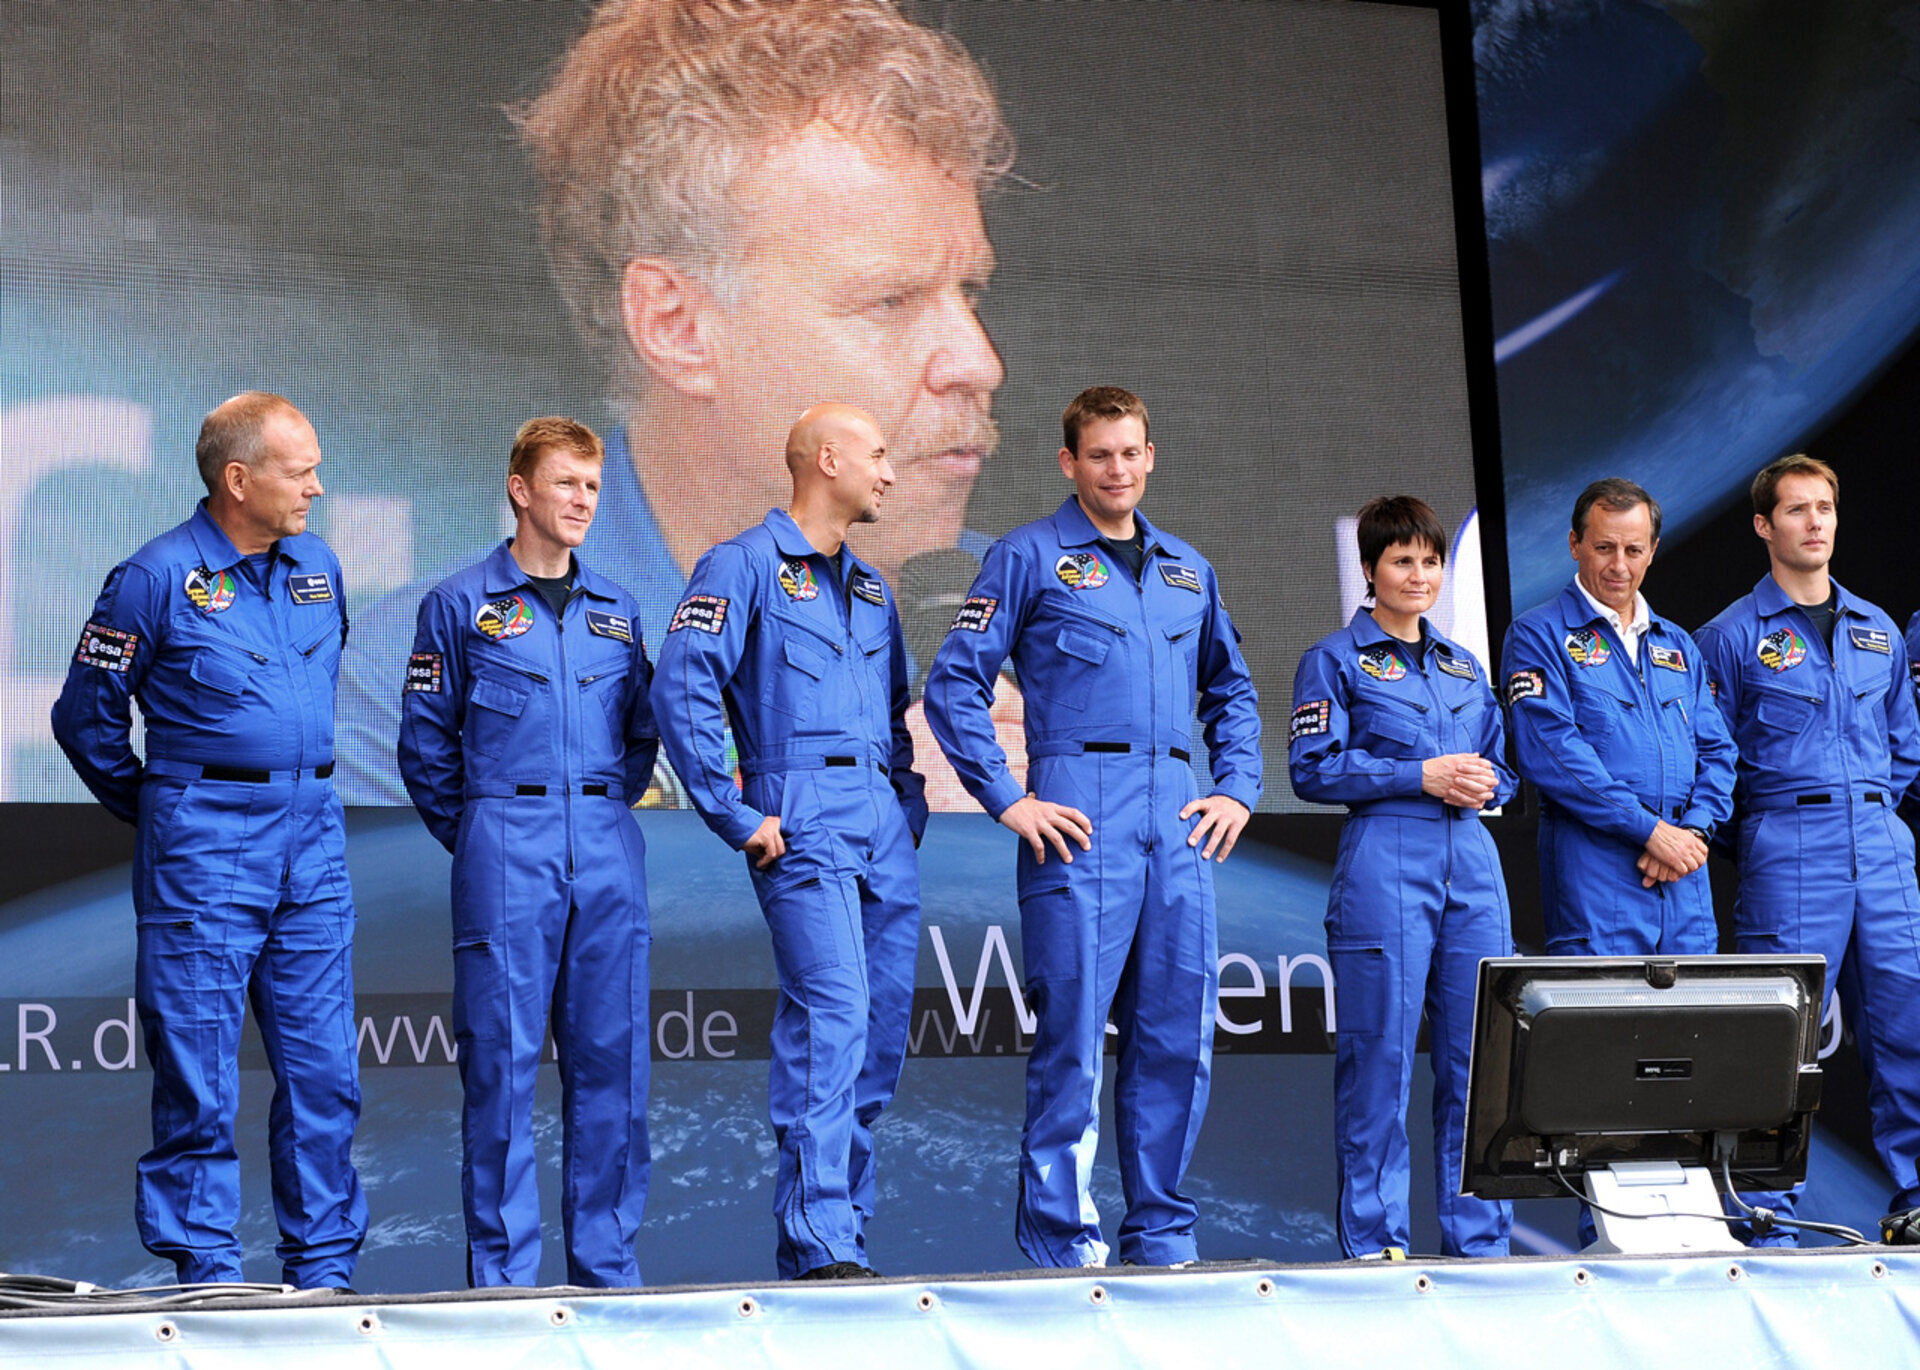 Chance to meet European astronauts